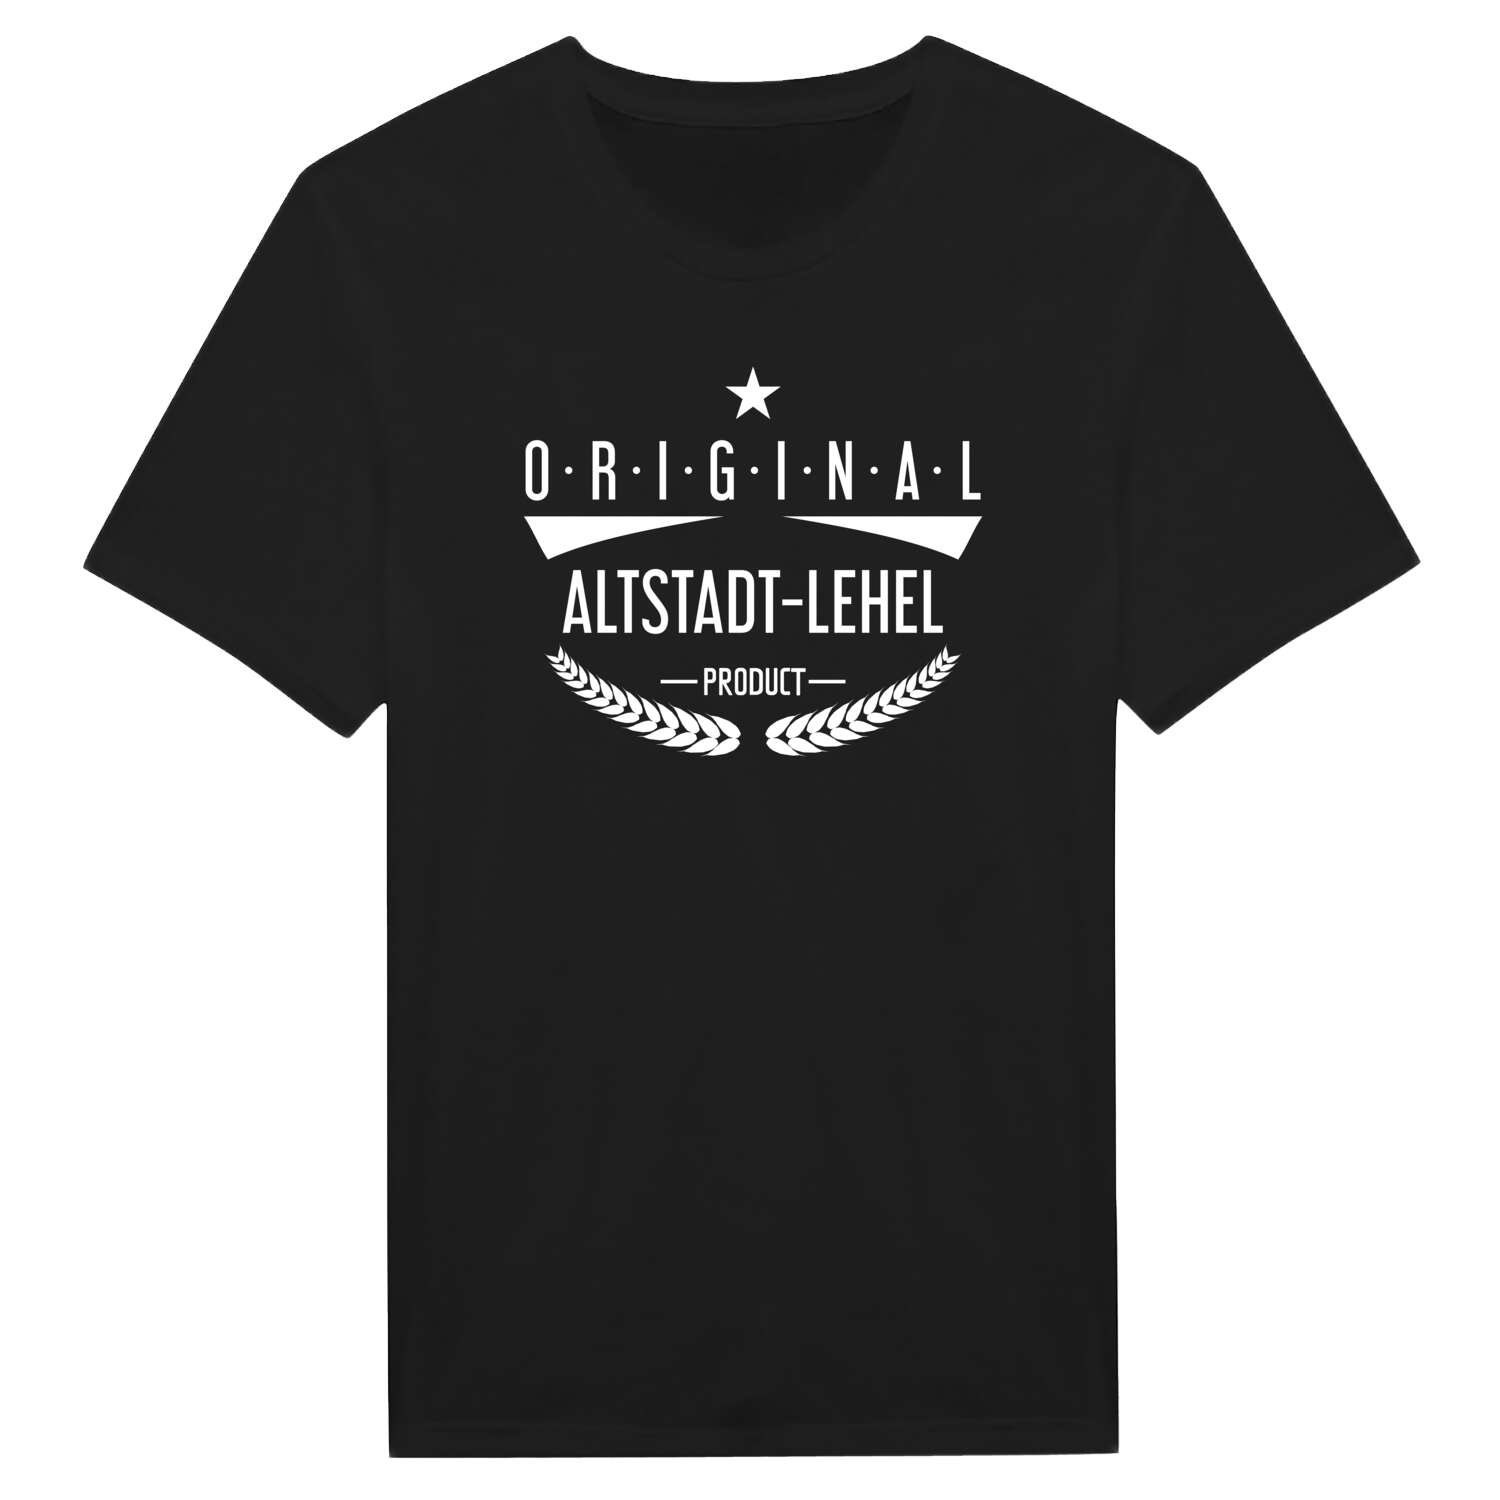 Altstadt-Lehel T-Shirt »Original Product«